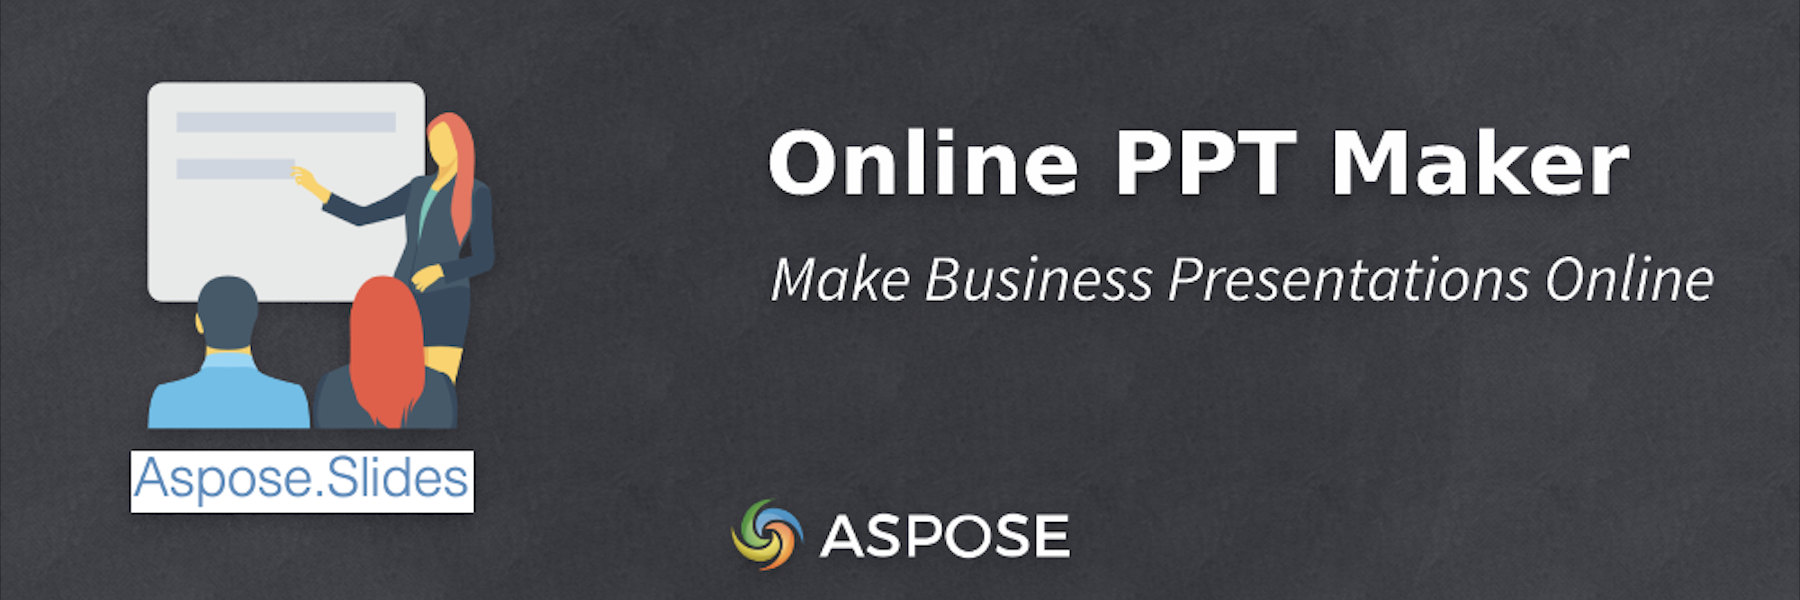 Online PPT Maker - สร้างการนำเสนอธุรกิจออนไลน์